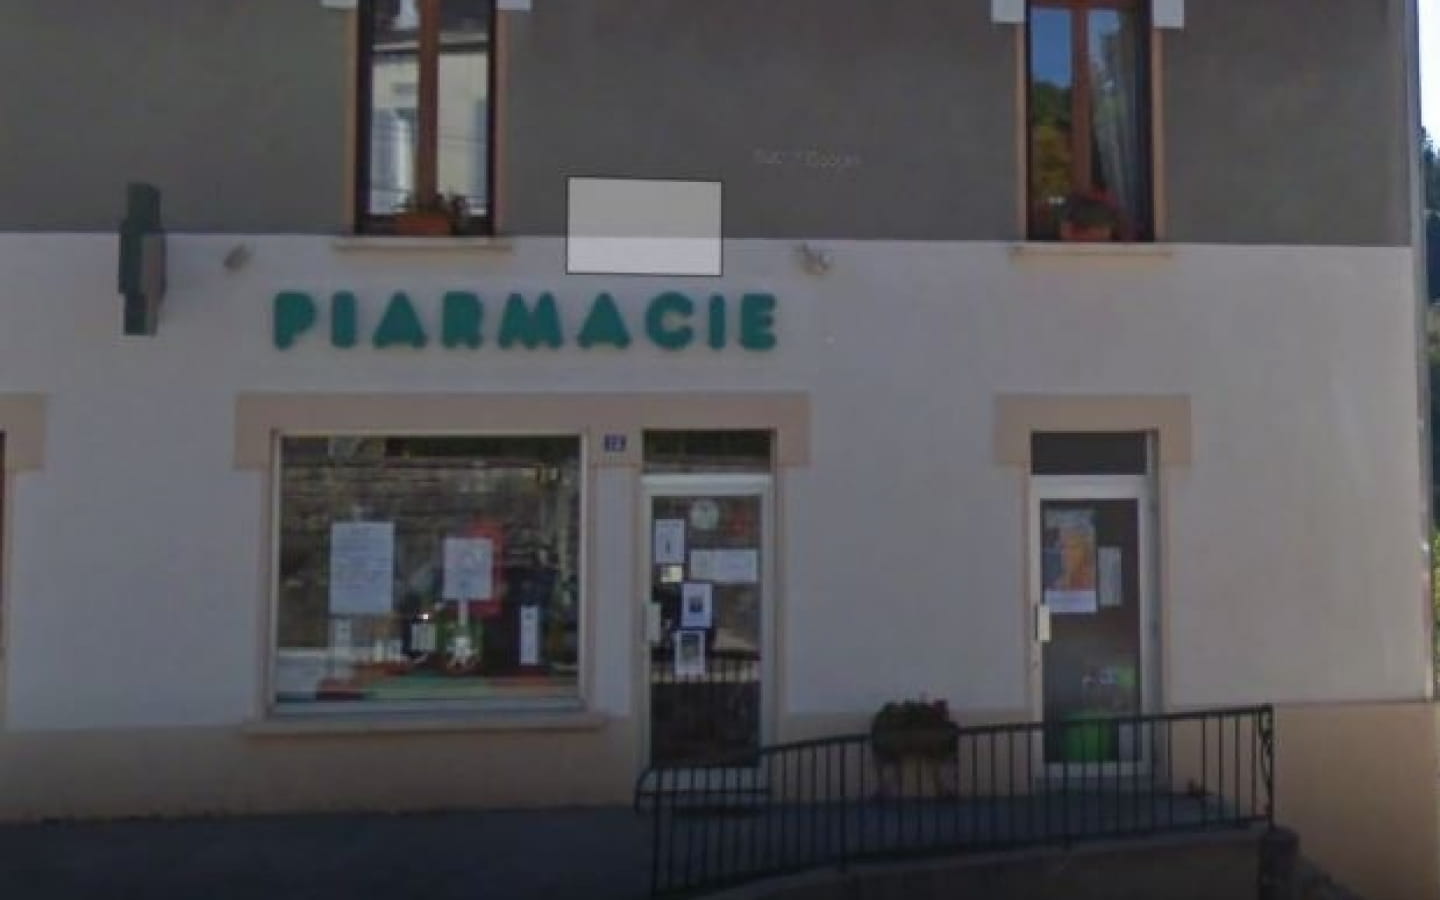 Pharmacie Piard-Pagnier